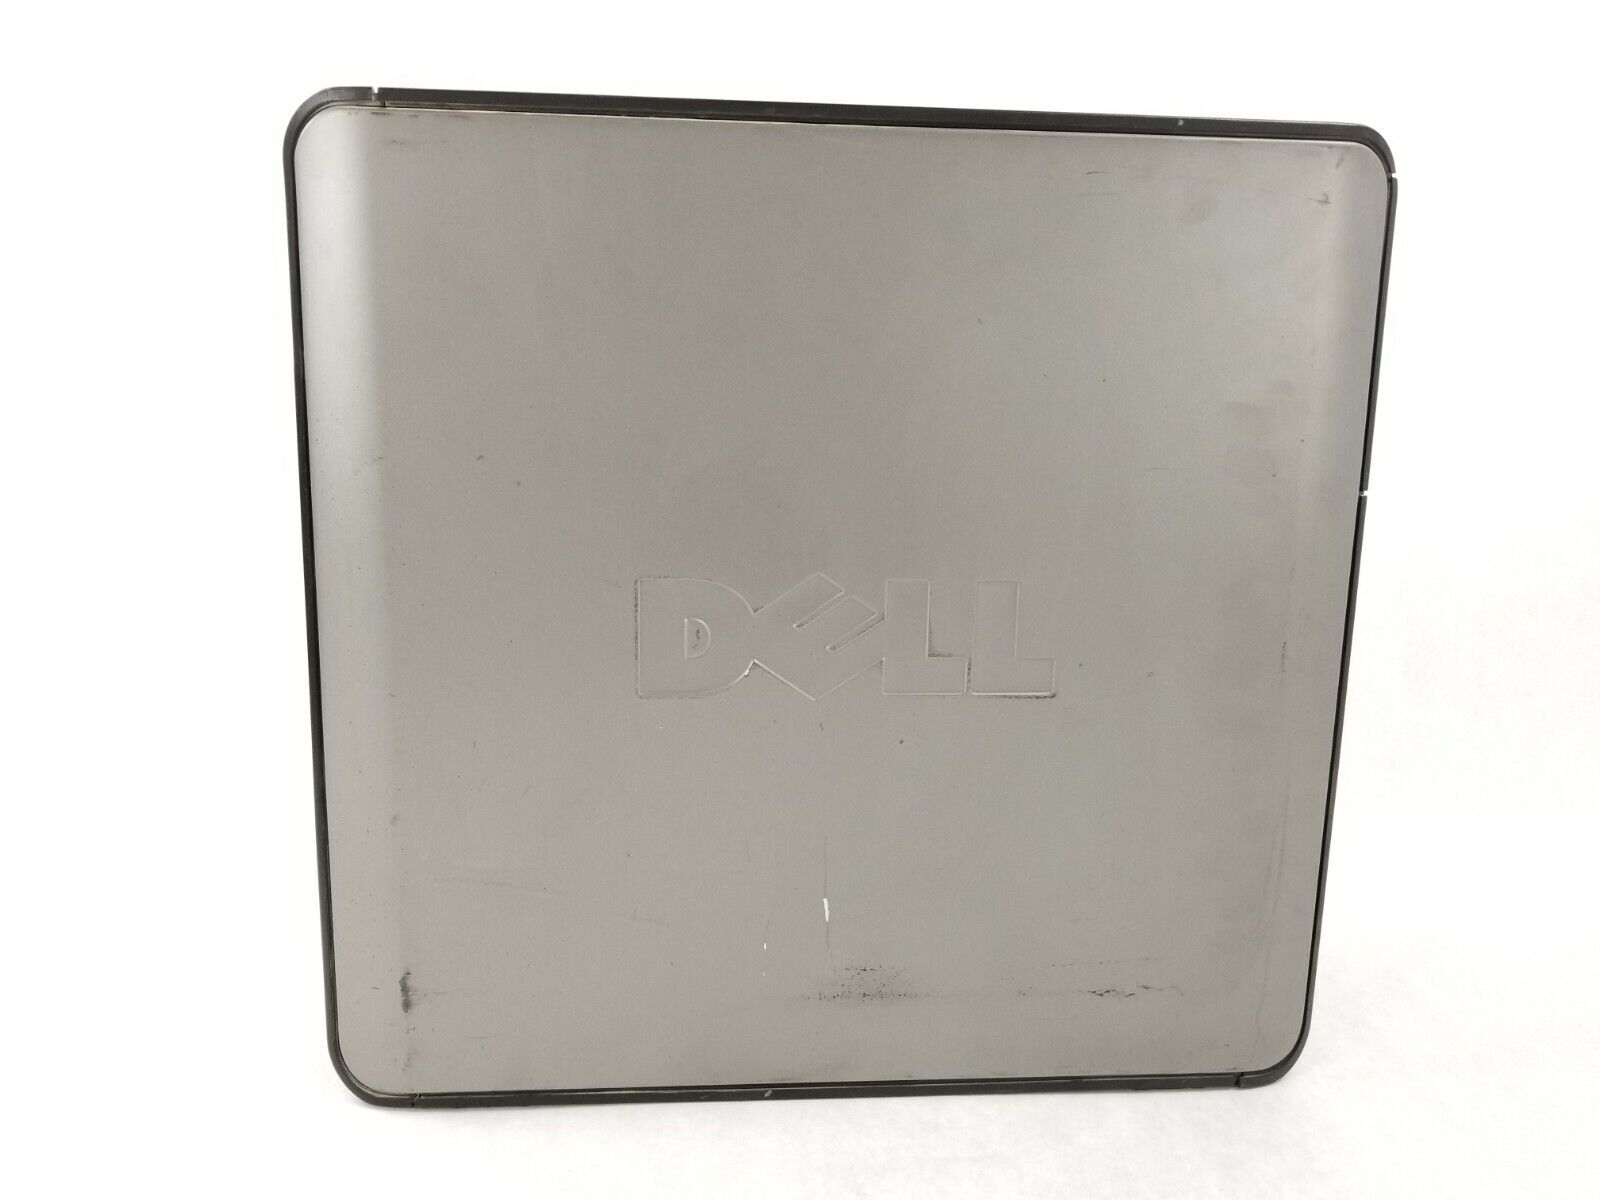 Dell Optiplex 360 MT Intel Pentium E5400 2.70GHz 2GB RAM CD-RW